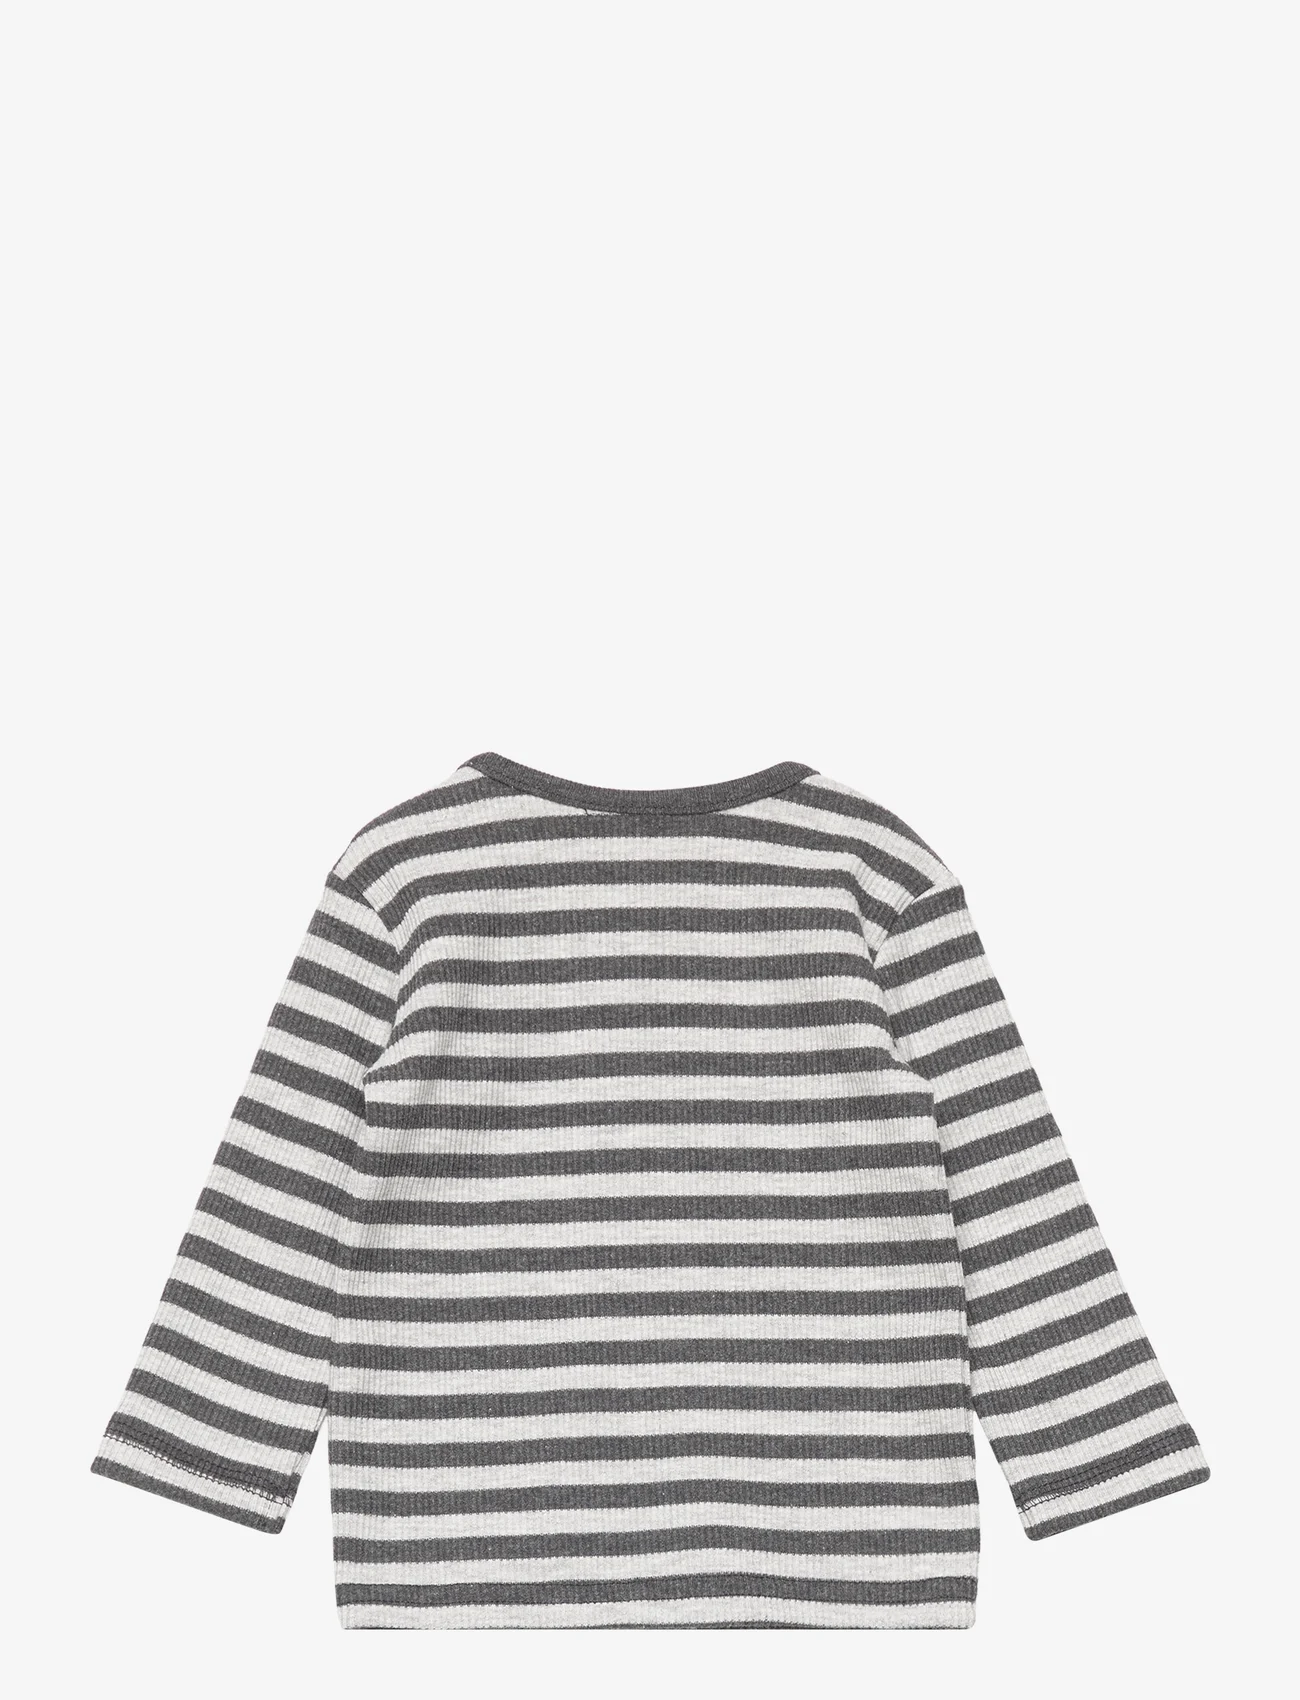 Noa Noa miniature - T-shirt - langärmelige - light/dark grey melange - 1